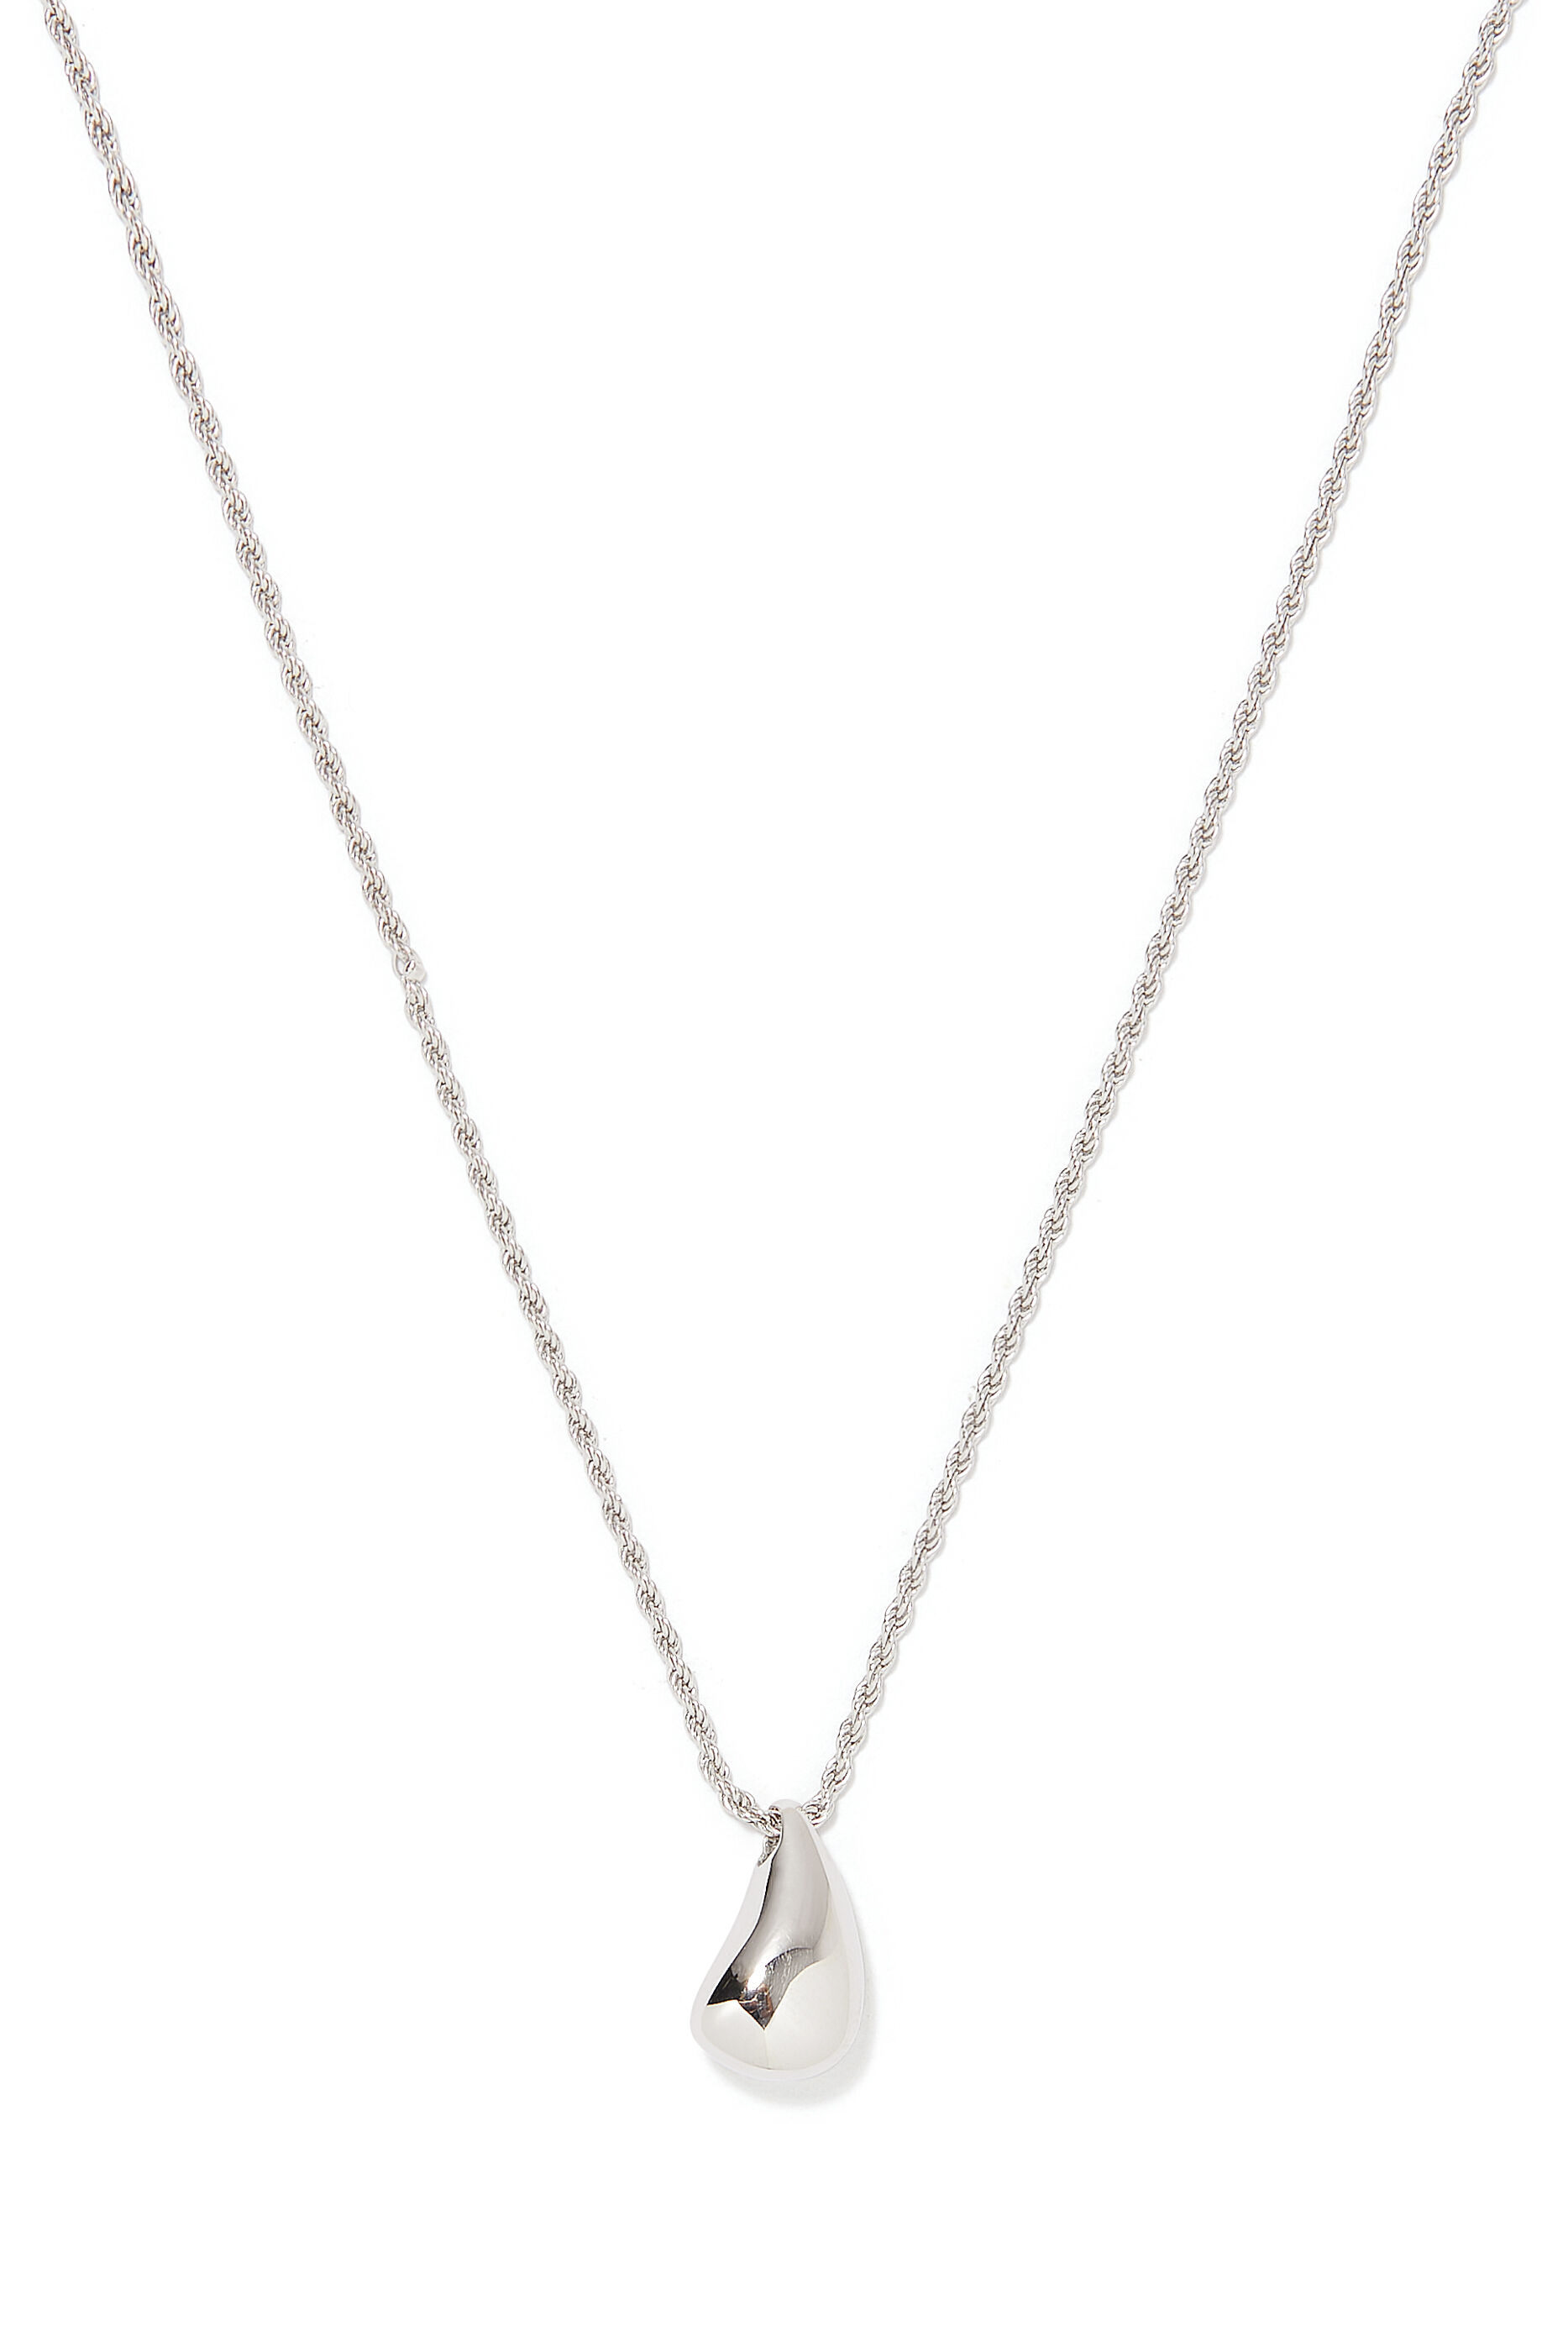 Sterling Silver Droplet Necklace - 18 Inch | HEIDIJHALE